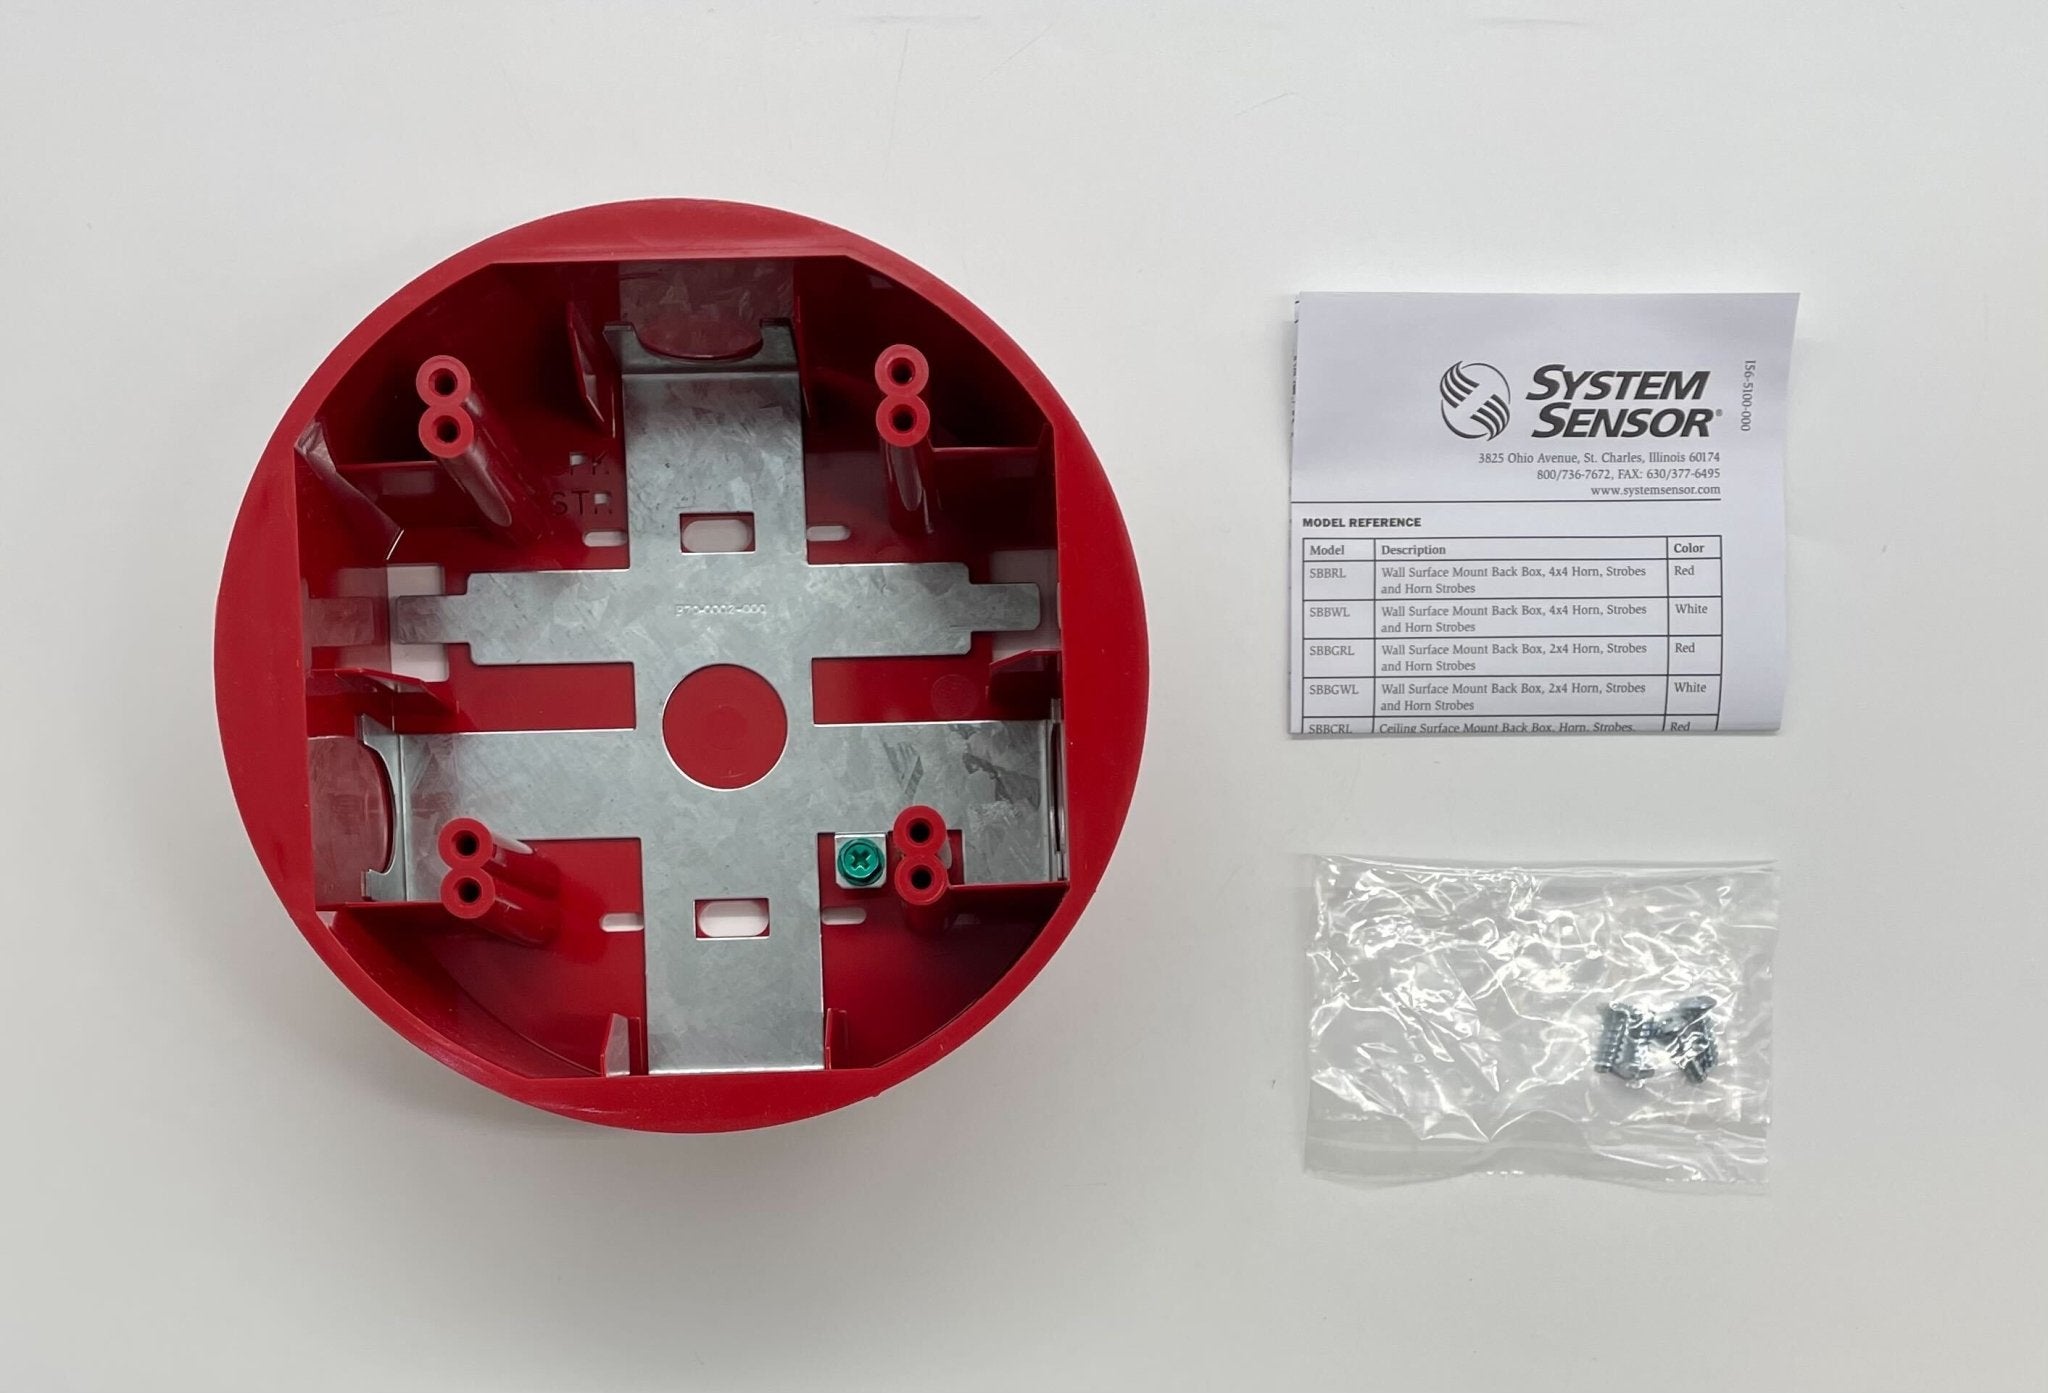 System Sensor SBBCRL Ceiling Surface Back-Box - The Fire Alarm Supplier